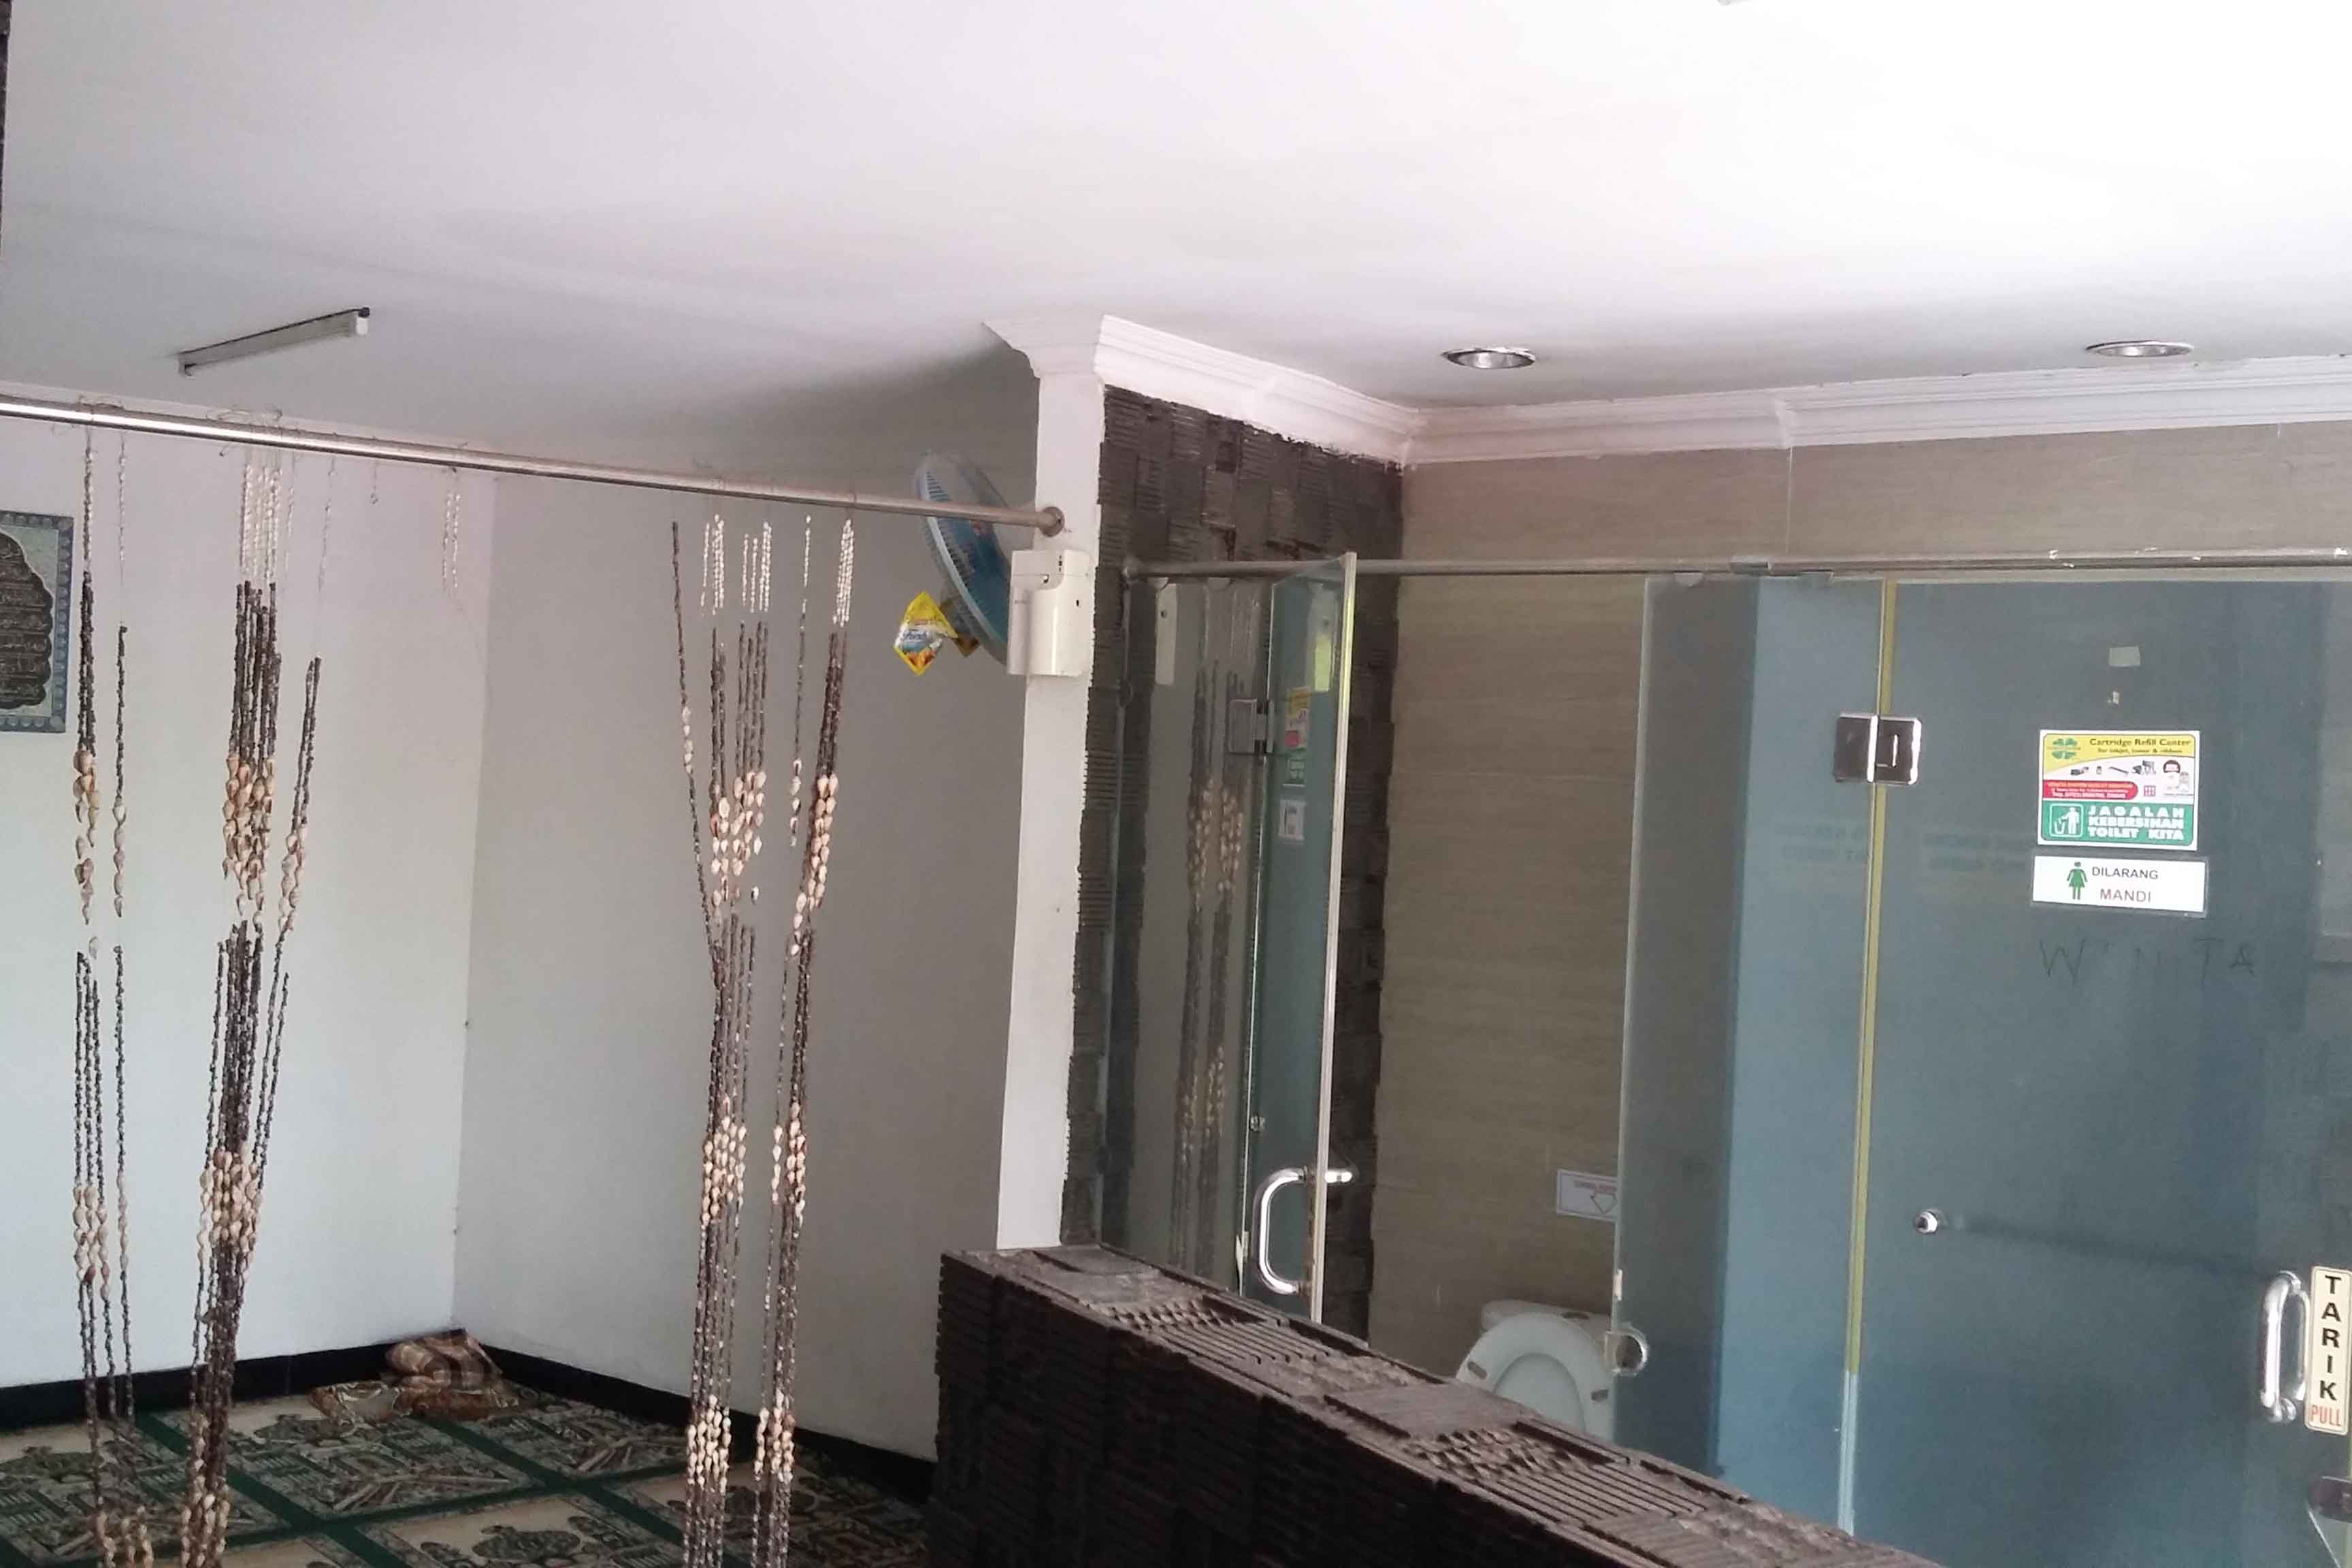 Mushala dibangun dalam satu ruangan dengan toilet. (Lampungnews/Davit)